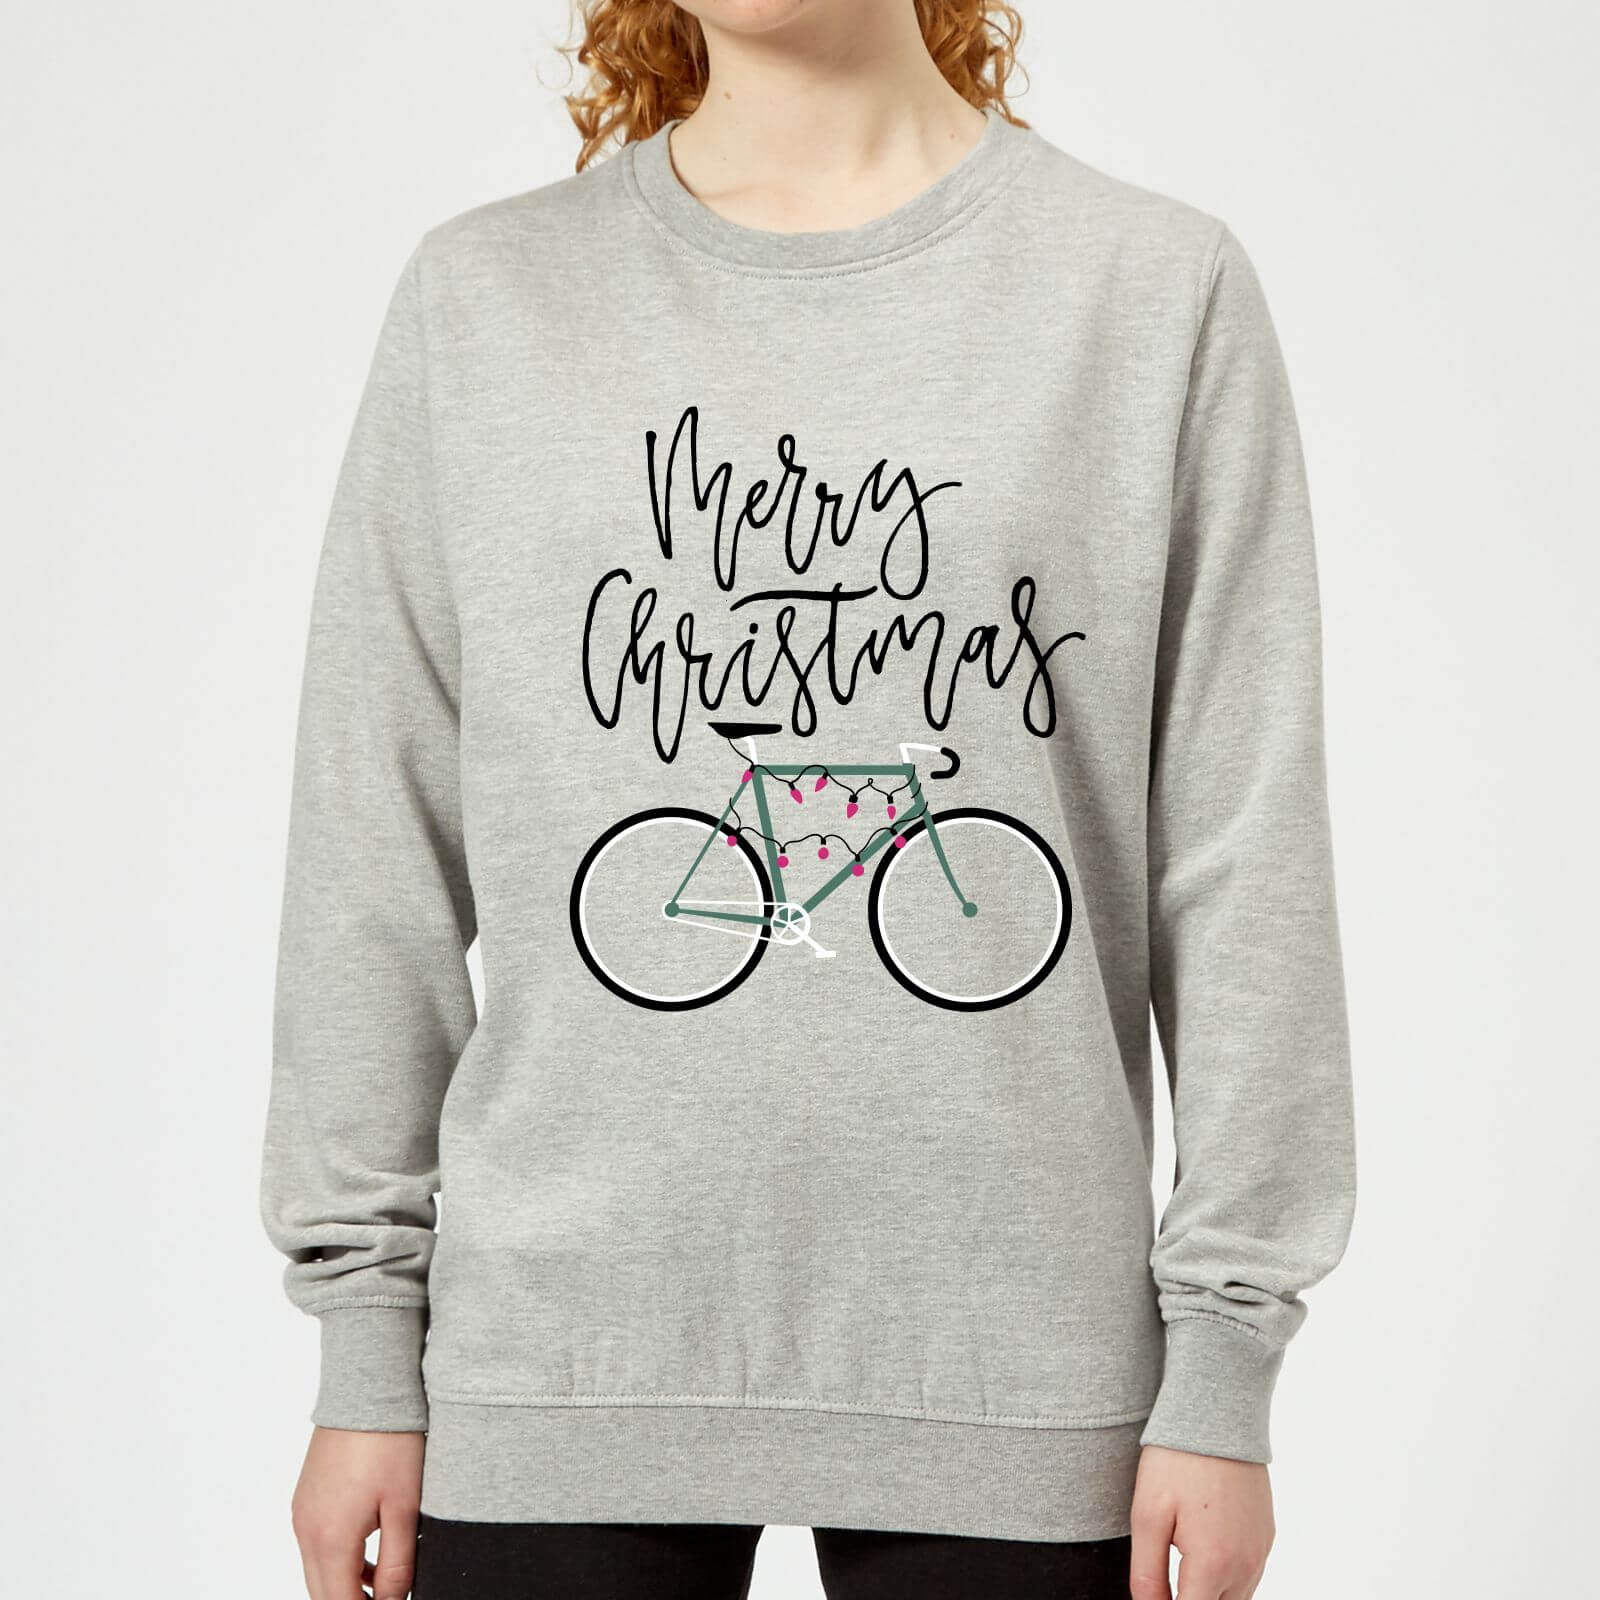 Bike Lights Women's Christmas Sweatshirt - Grey - M